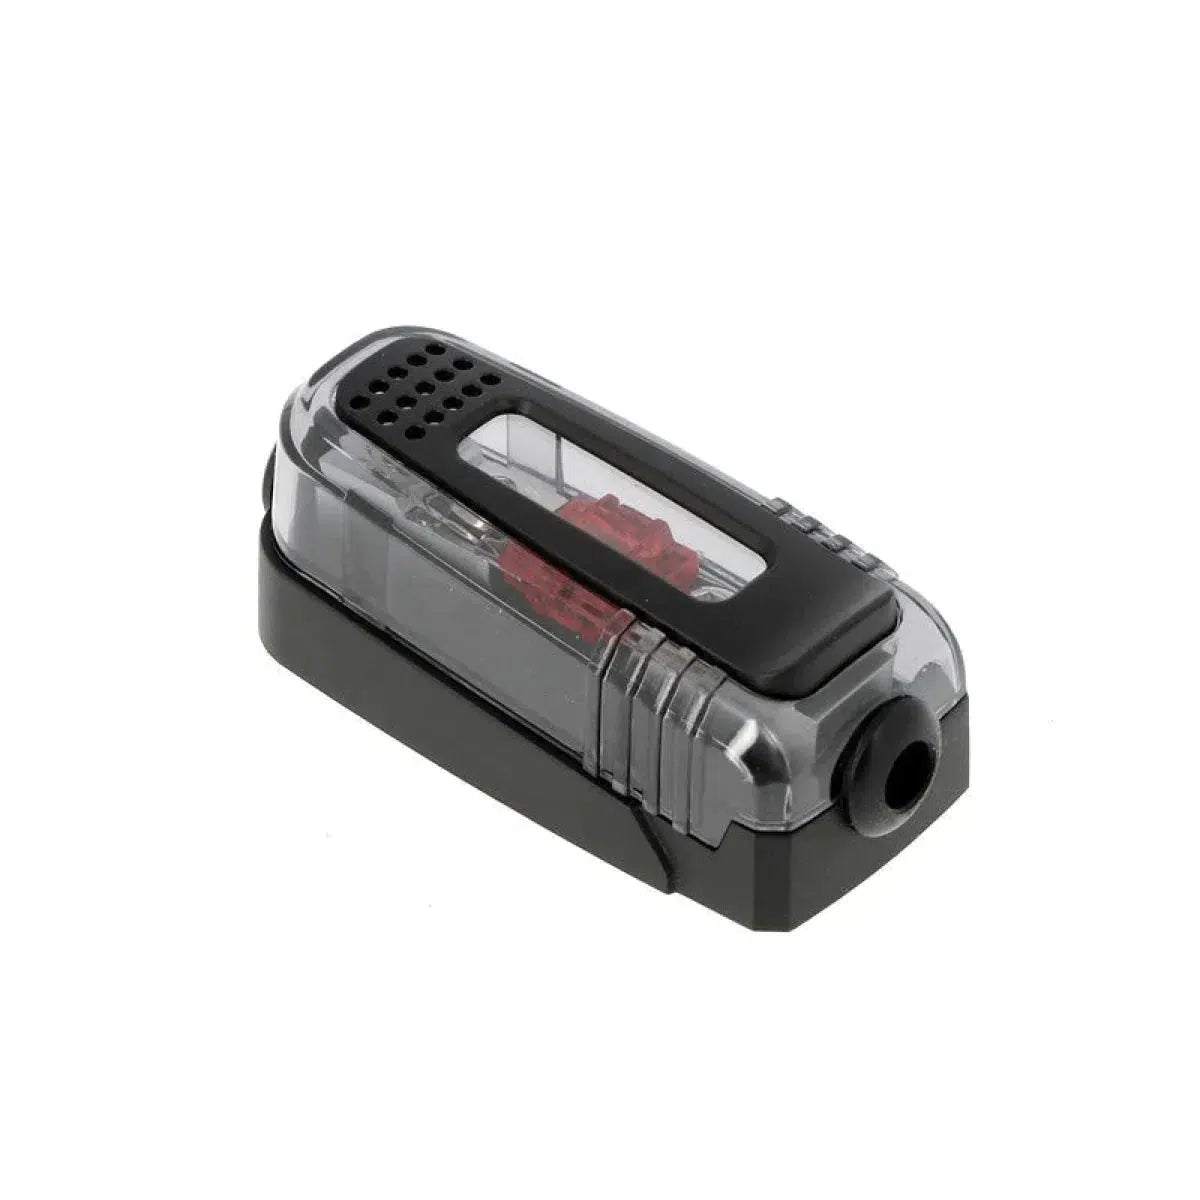 Masori-10mm²-25mm² Mini-ANL Splash-proof fuse holder-Masori.de